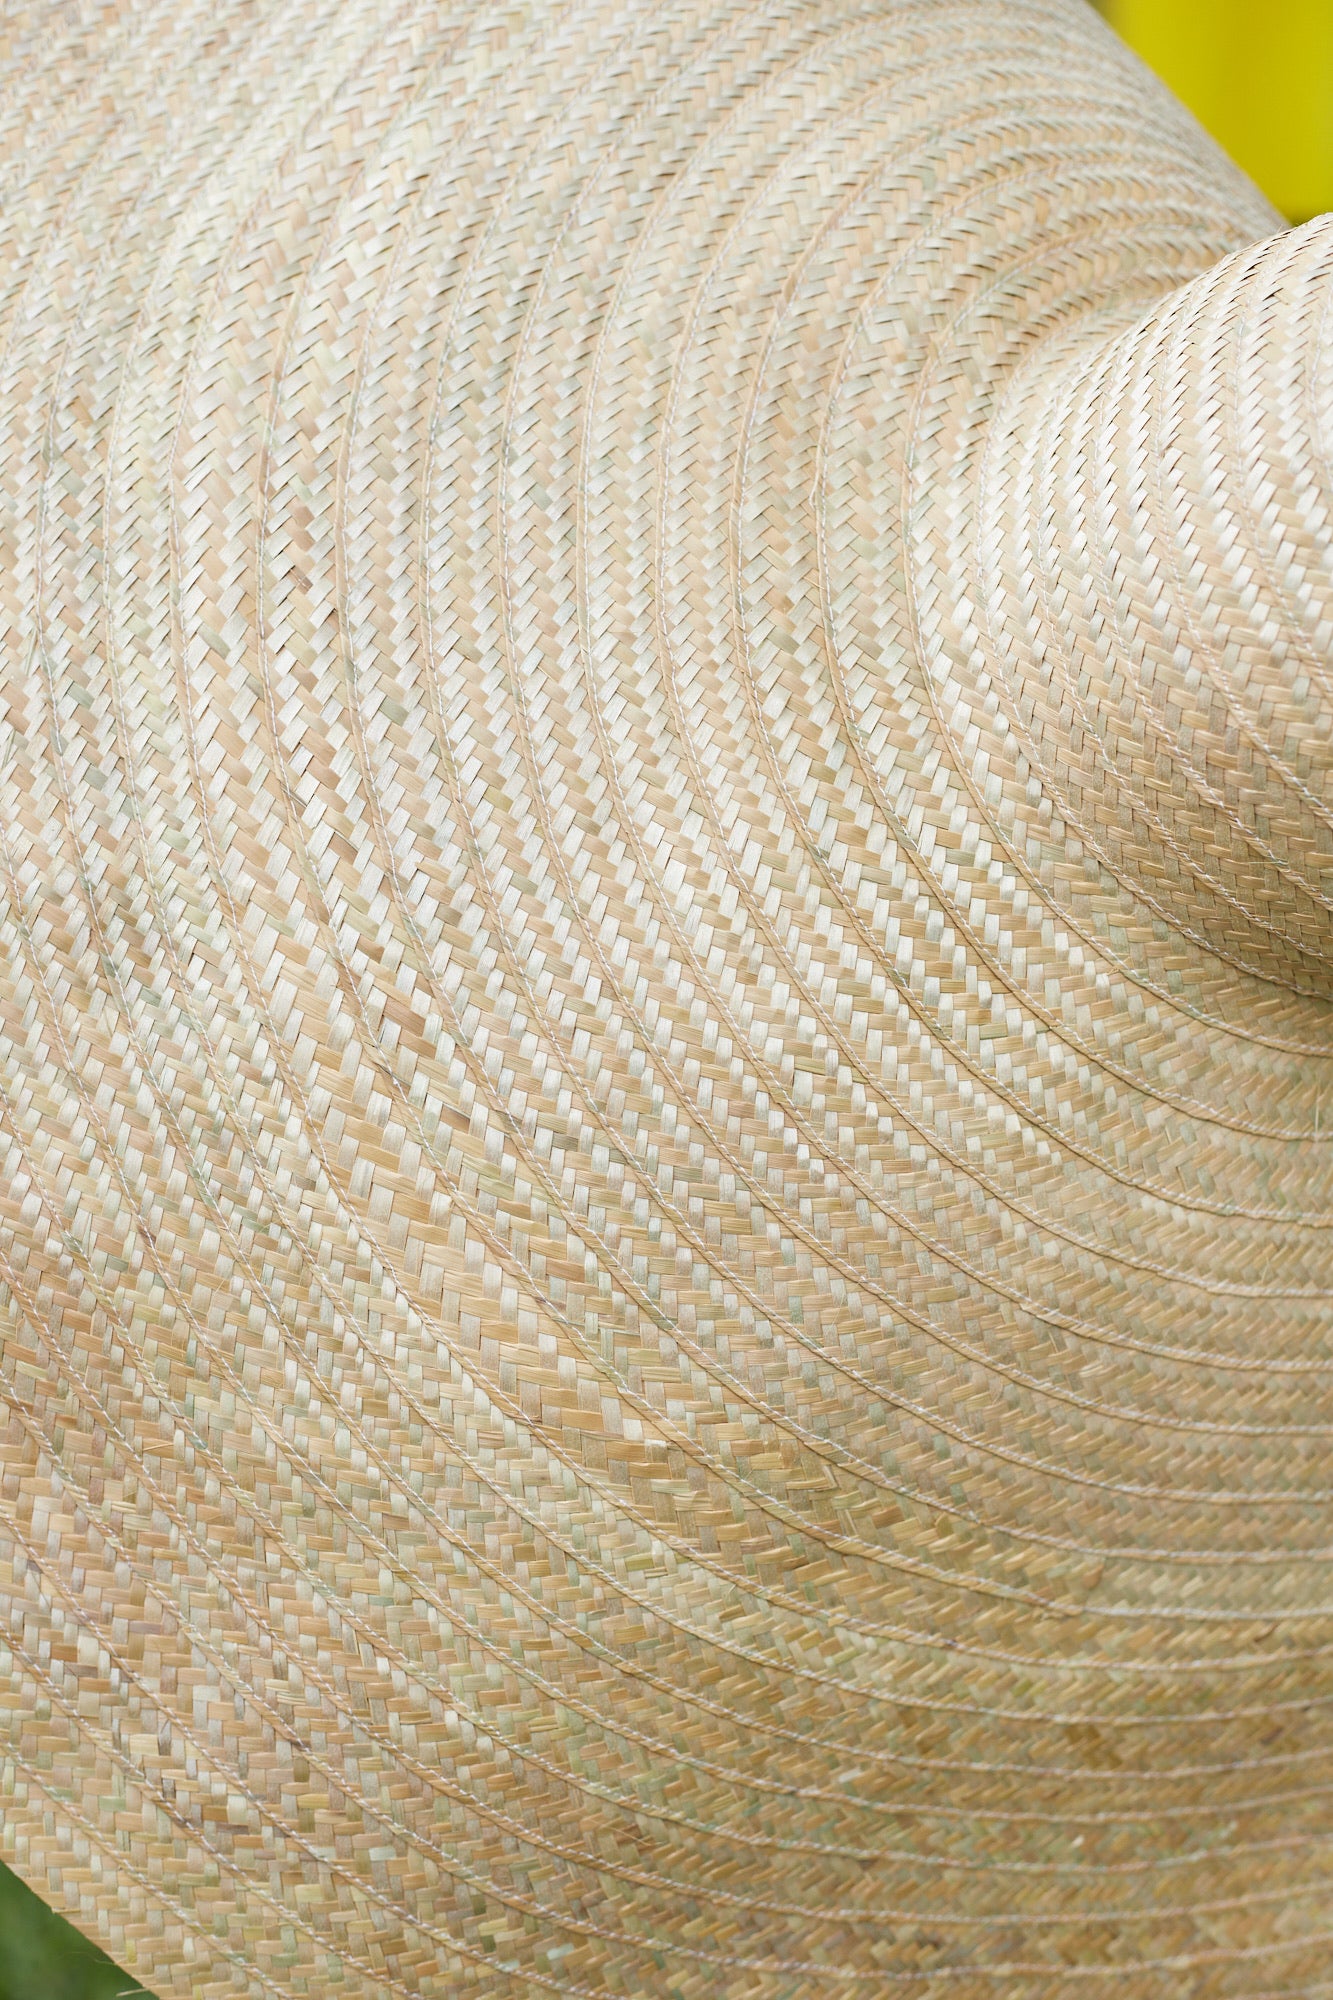 Shade Me - handmade straw beach hats